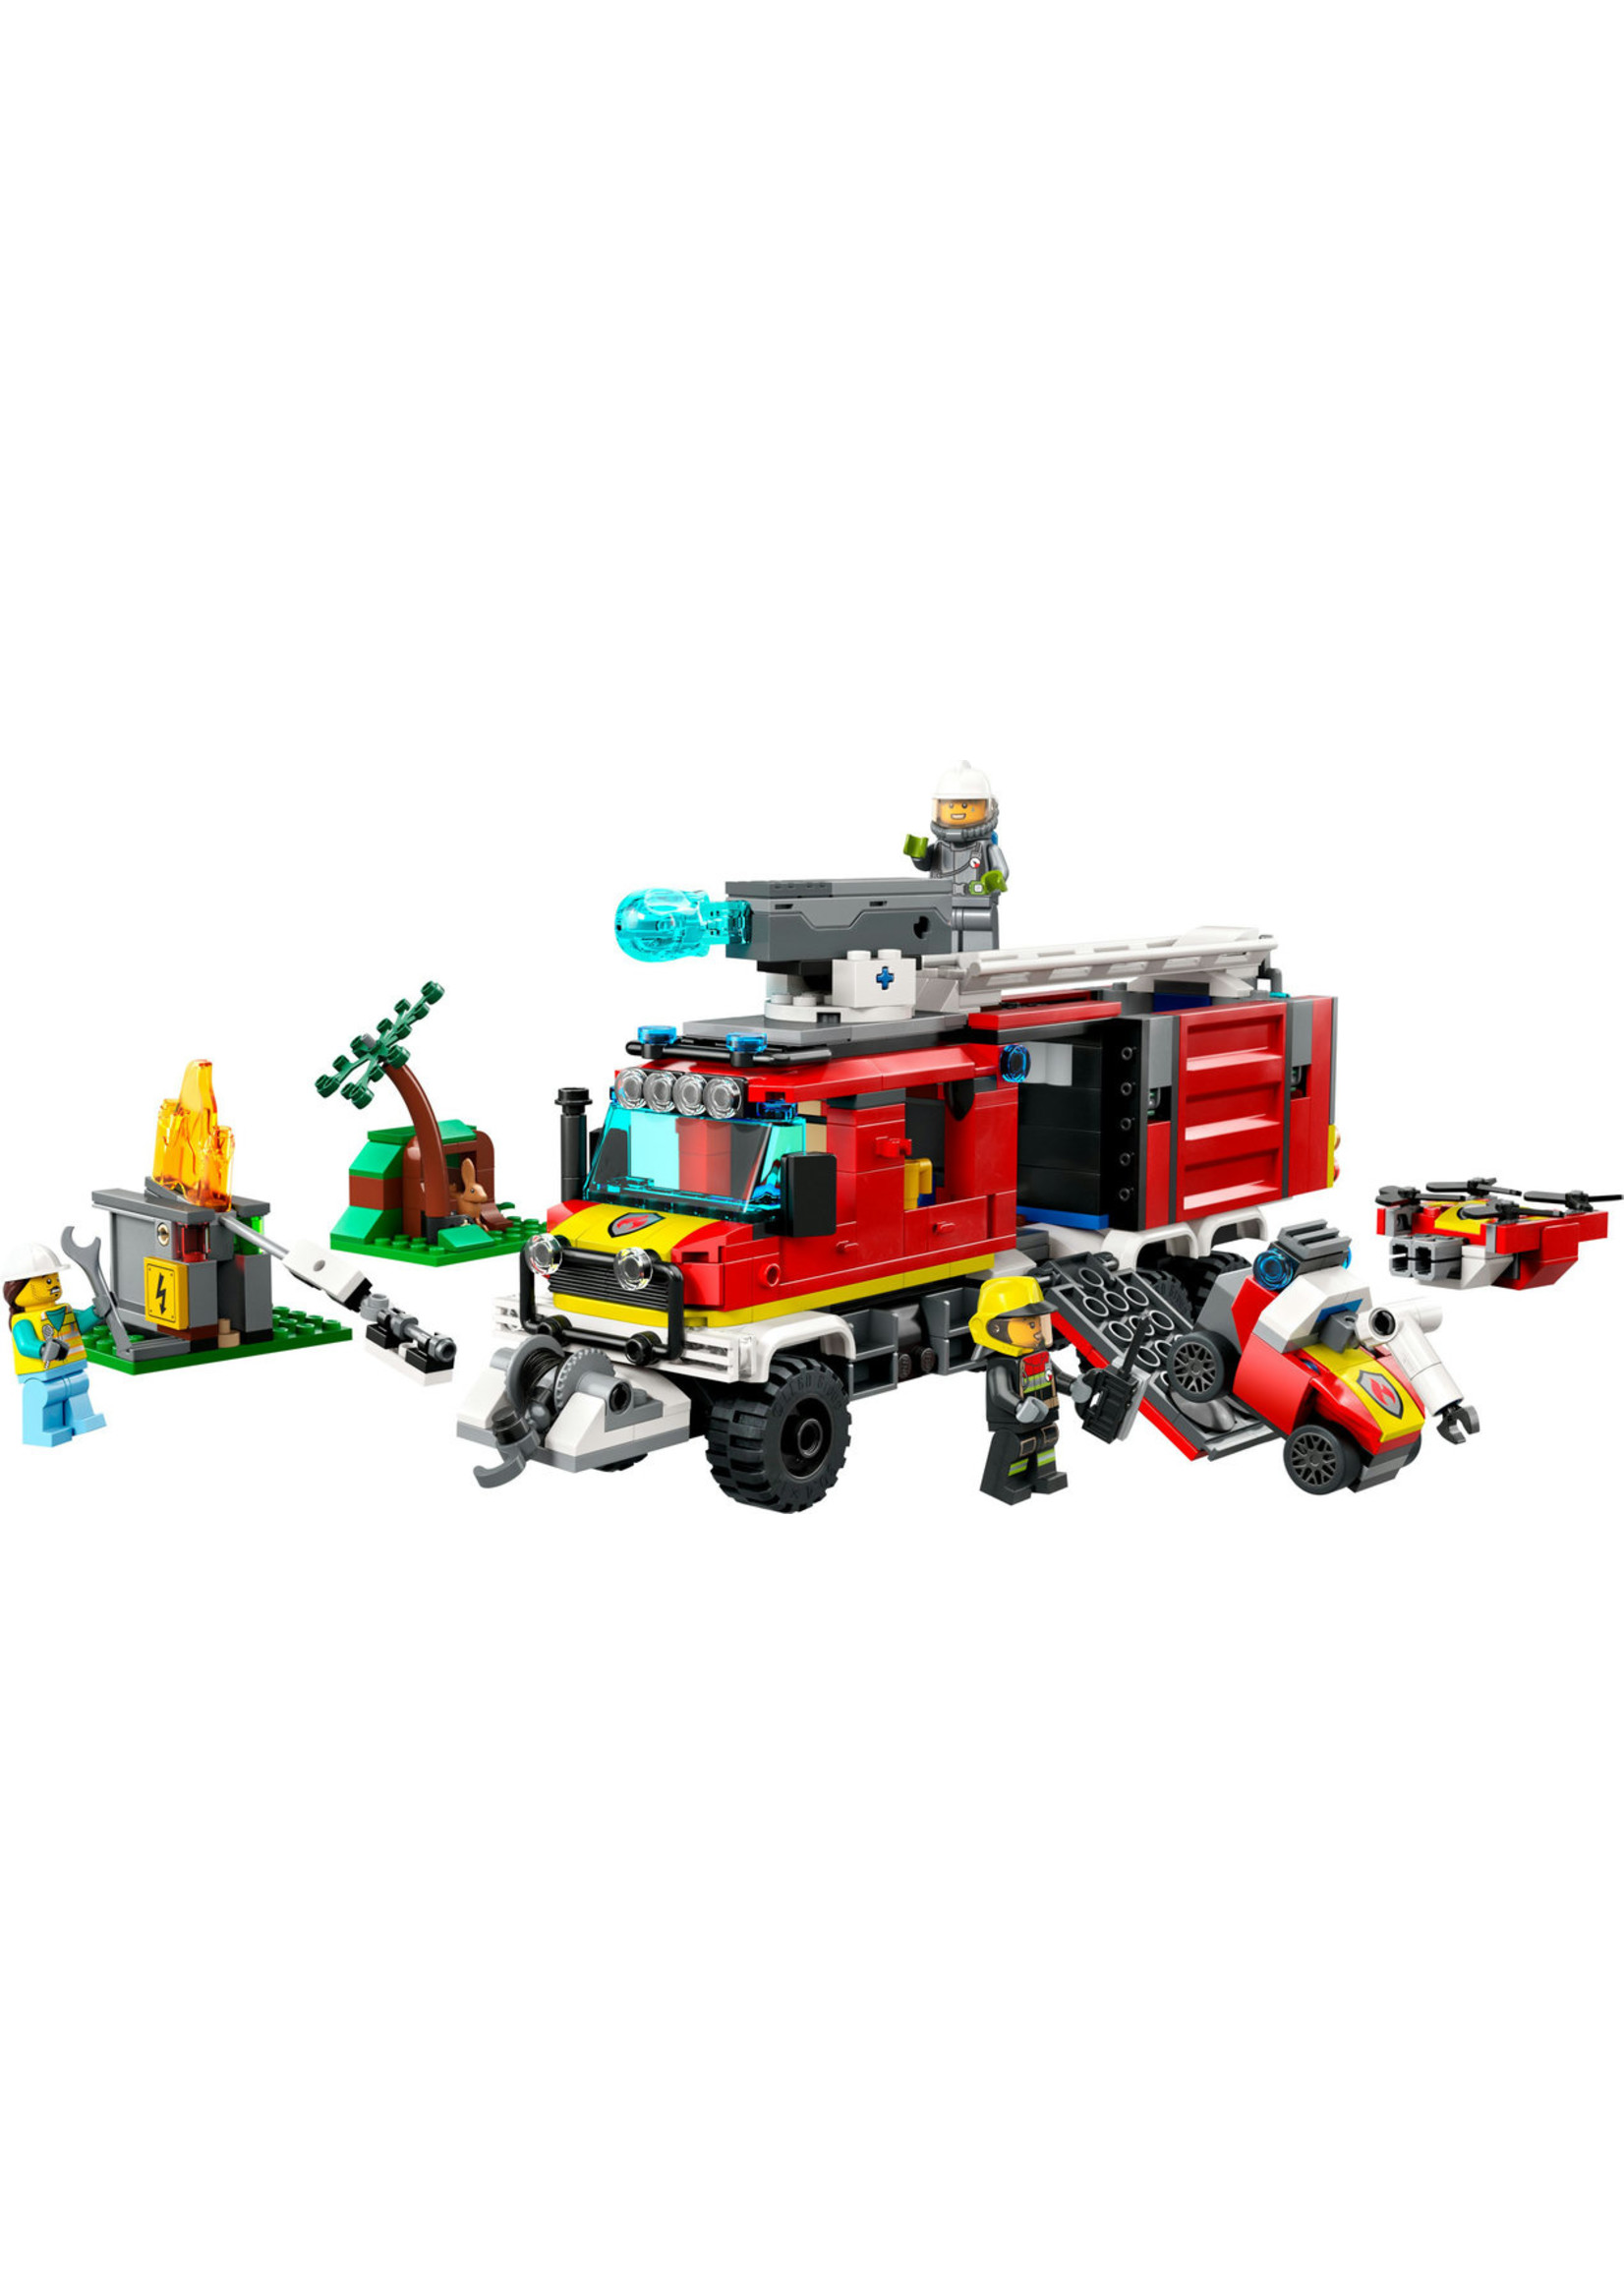 LEGO 60374 - Fire Command Truck